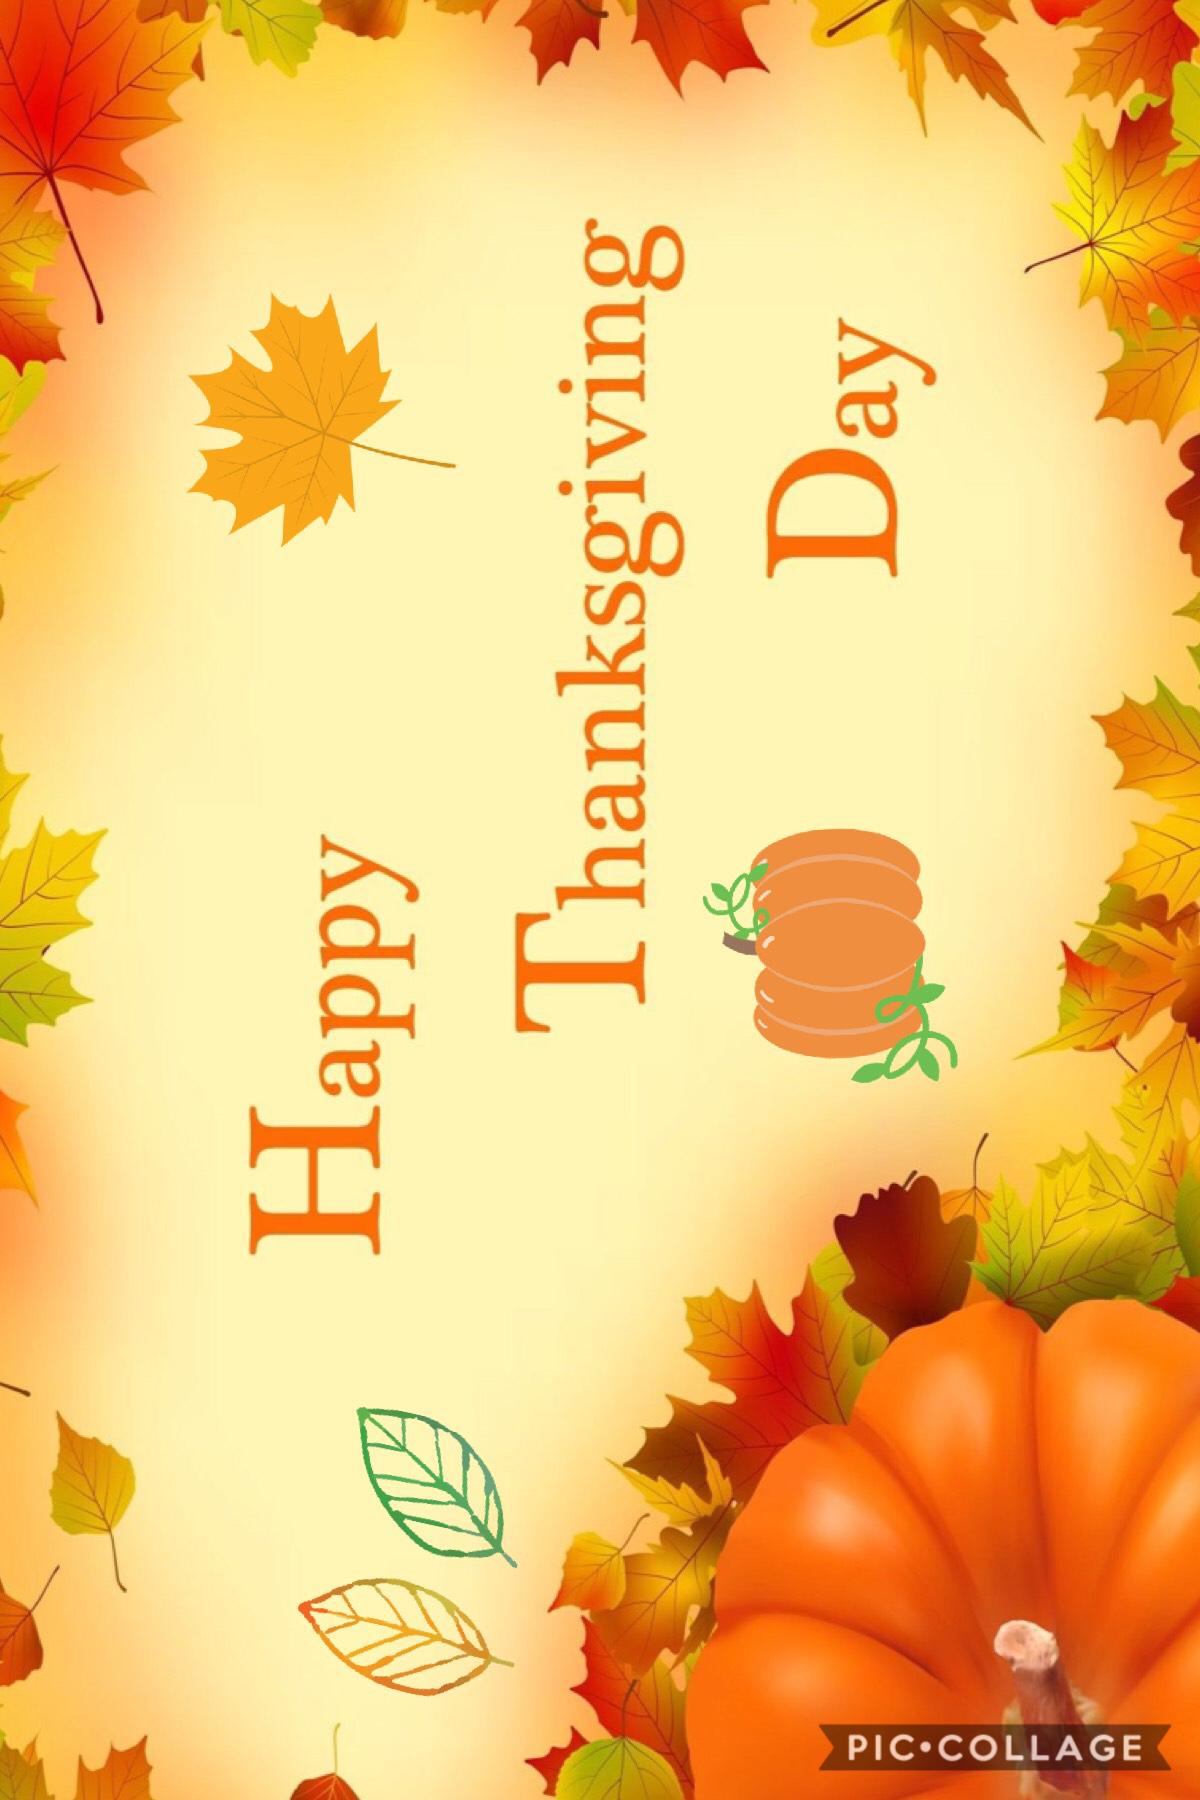 Happy thanksgiving everyone 